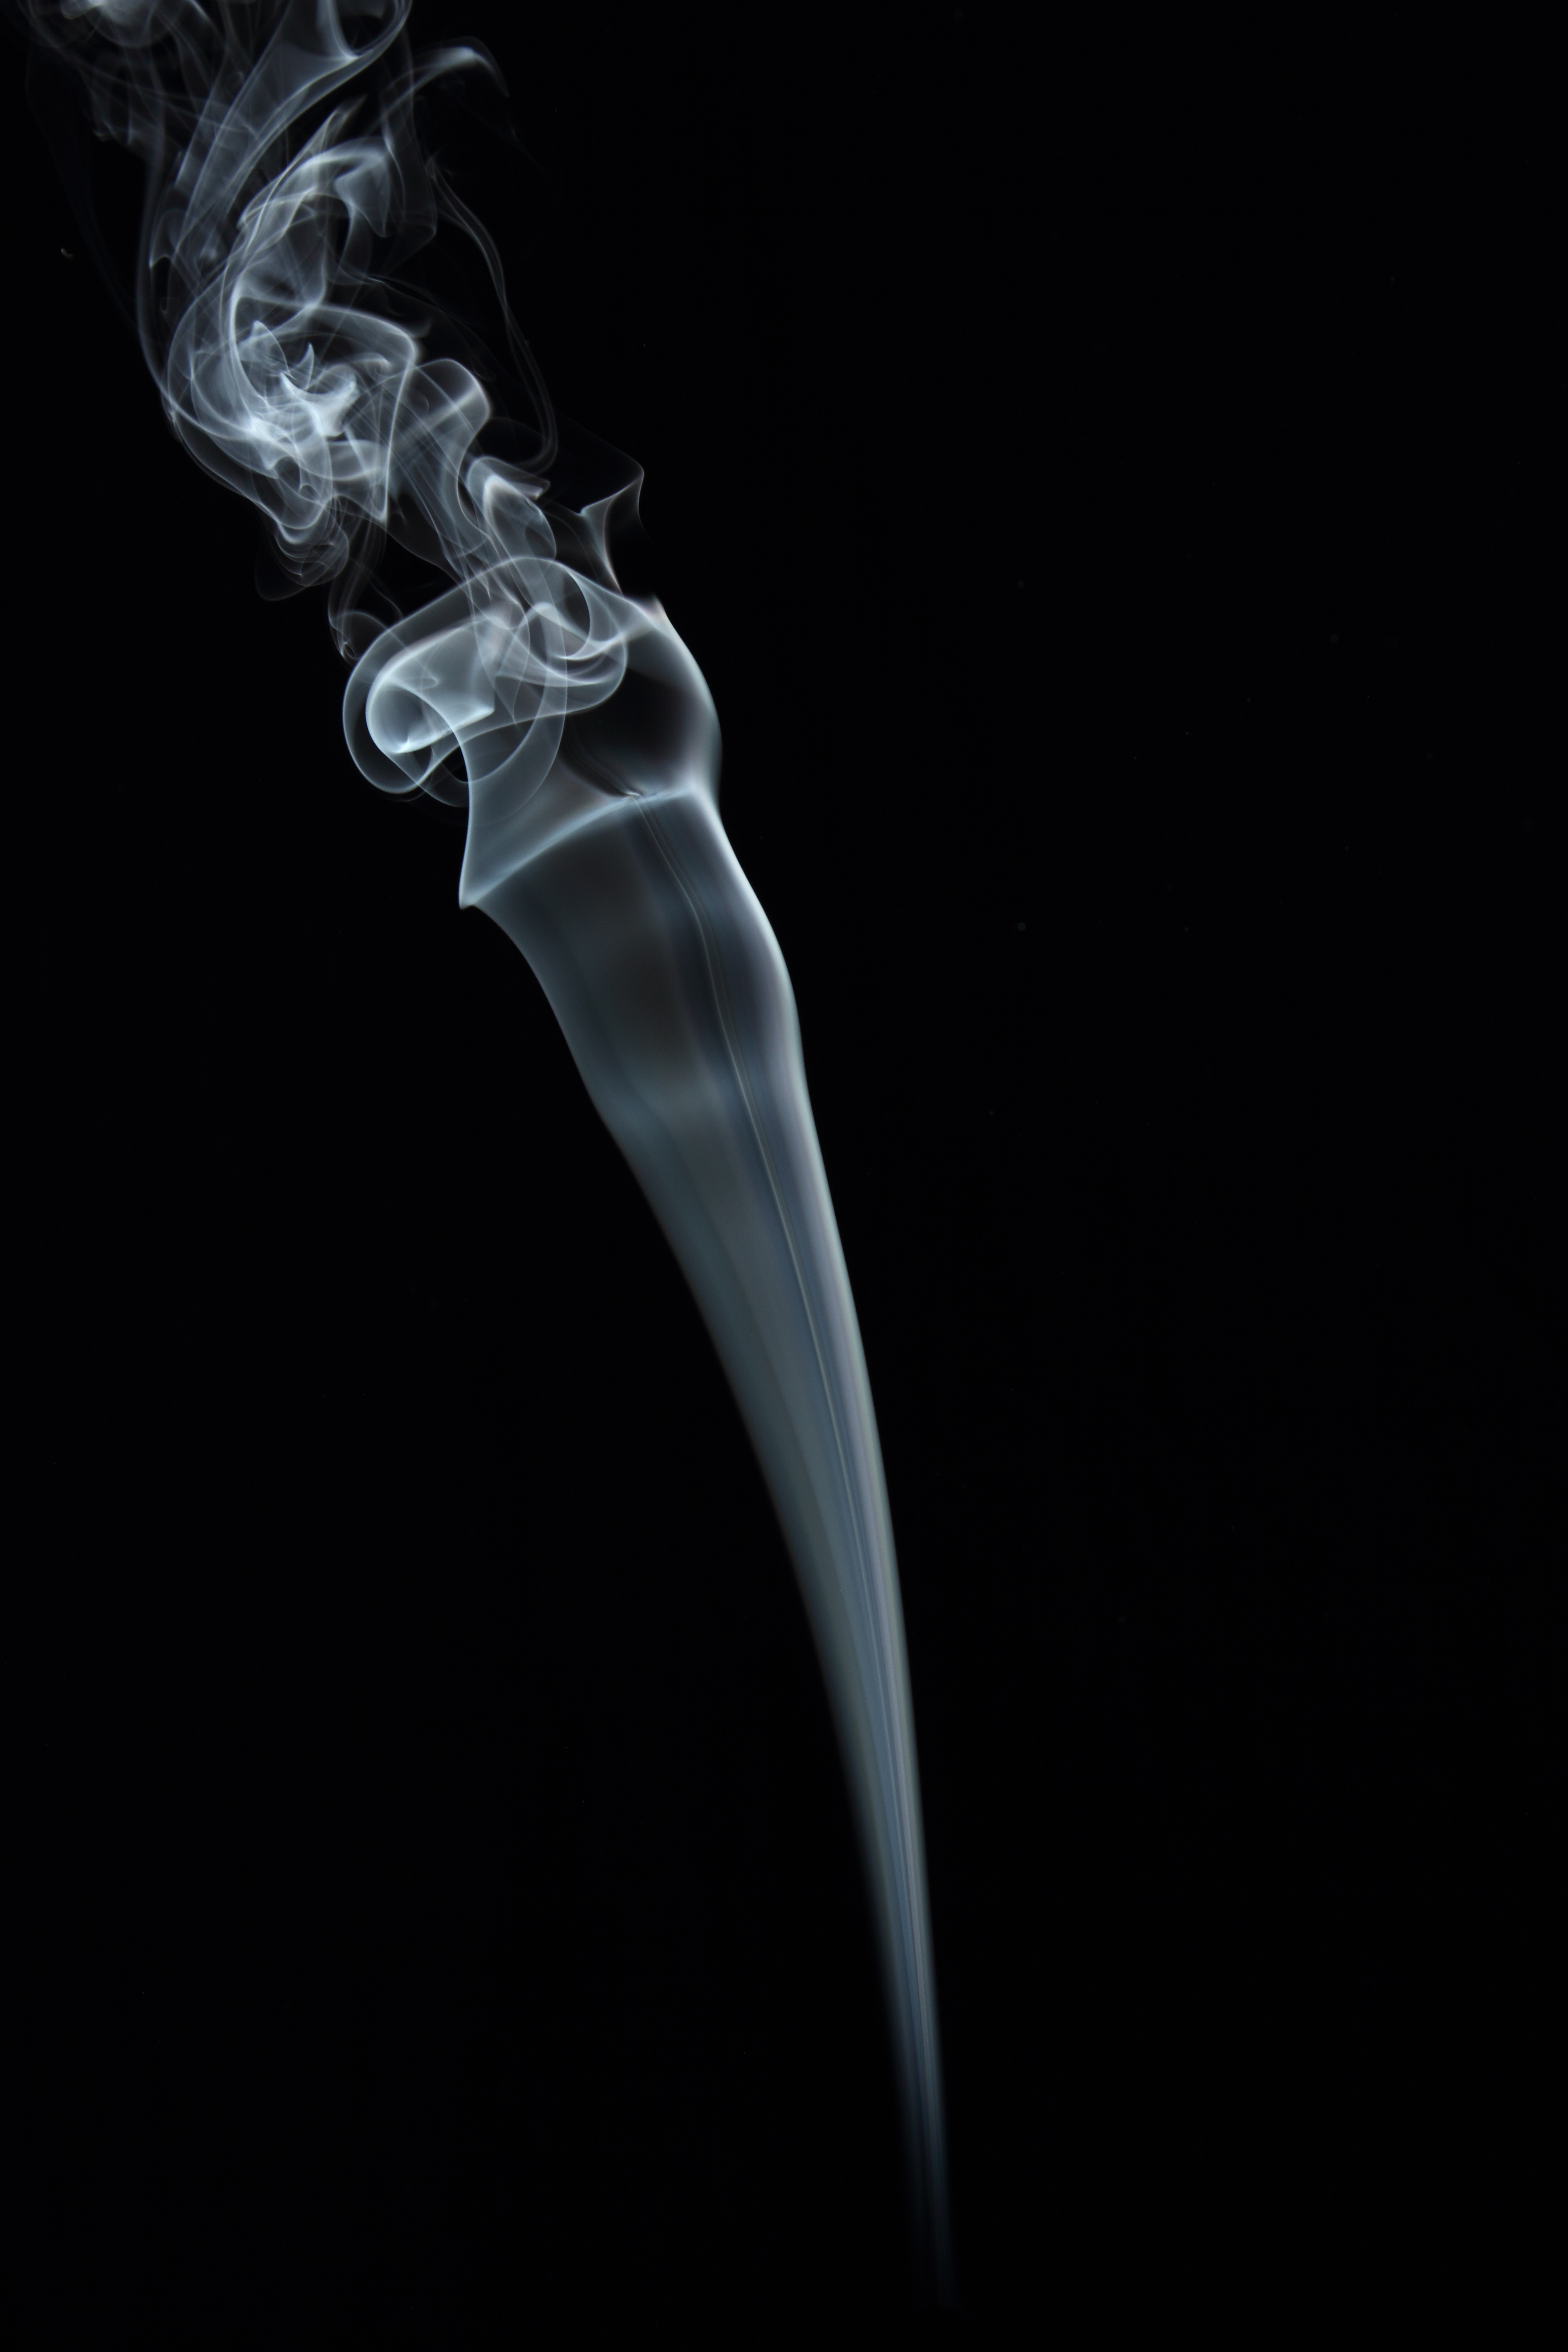 Smoke wisp photo